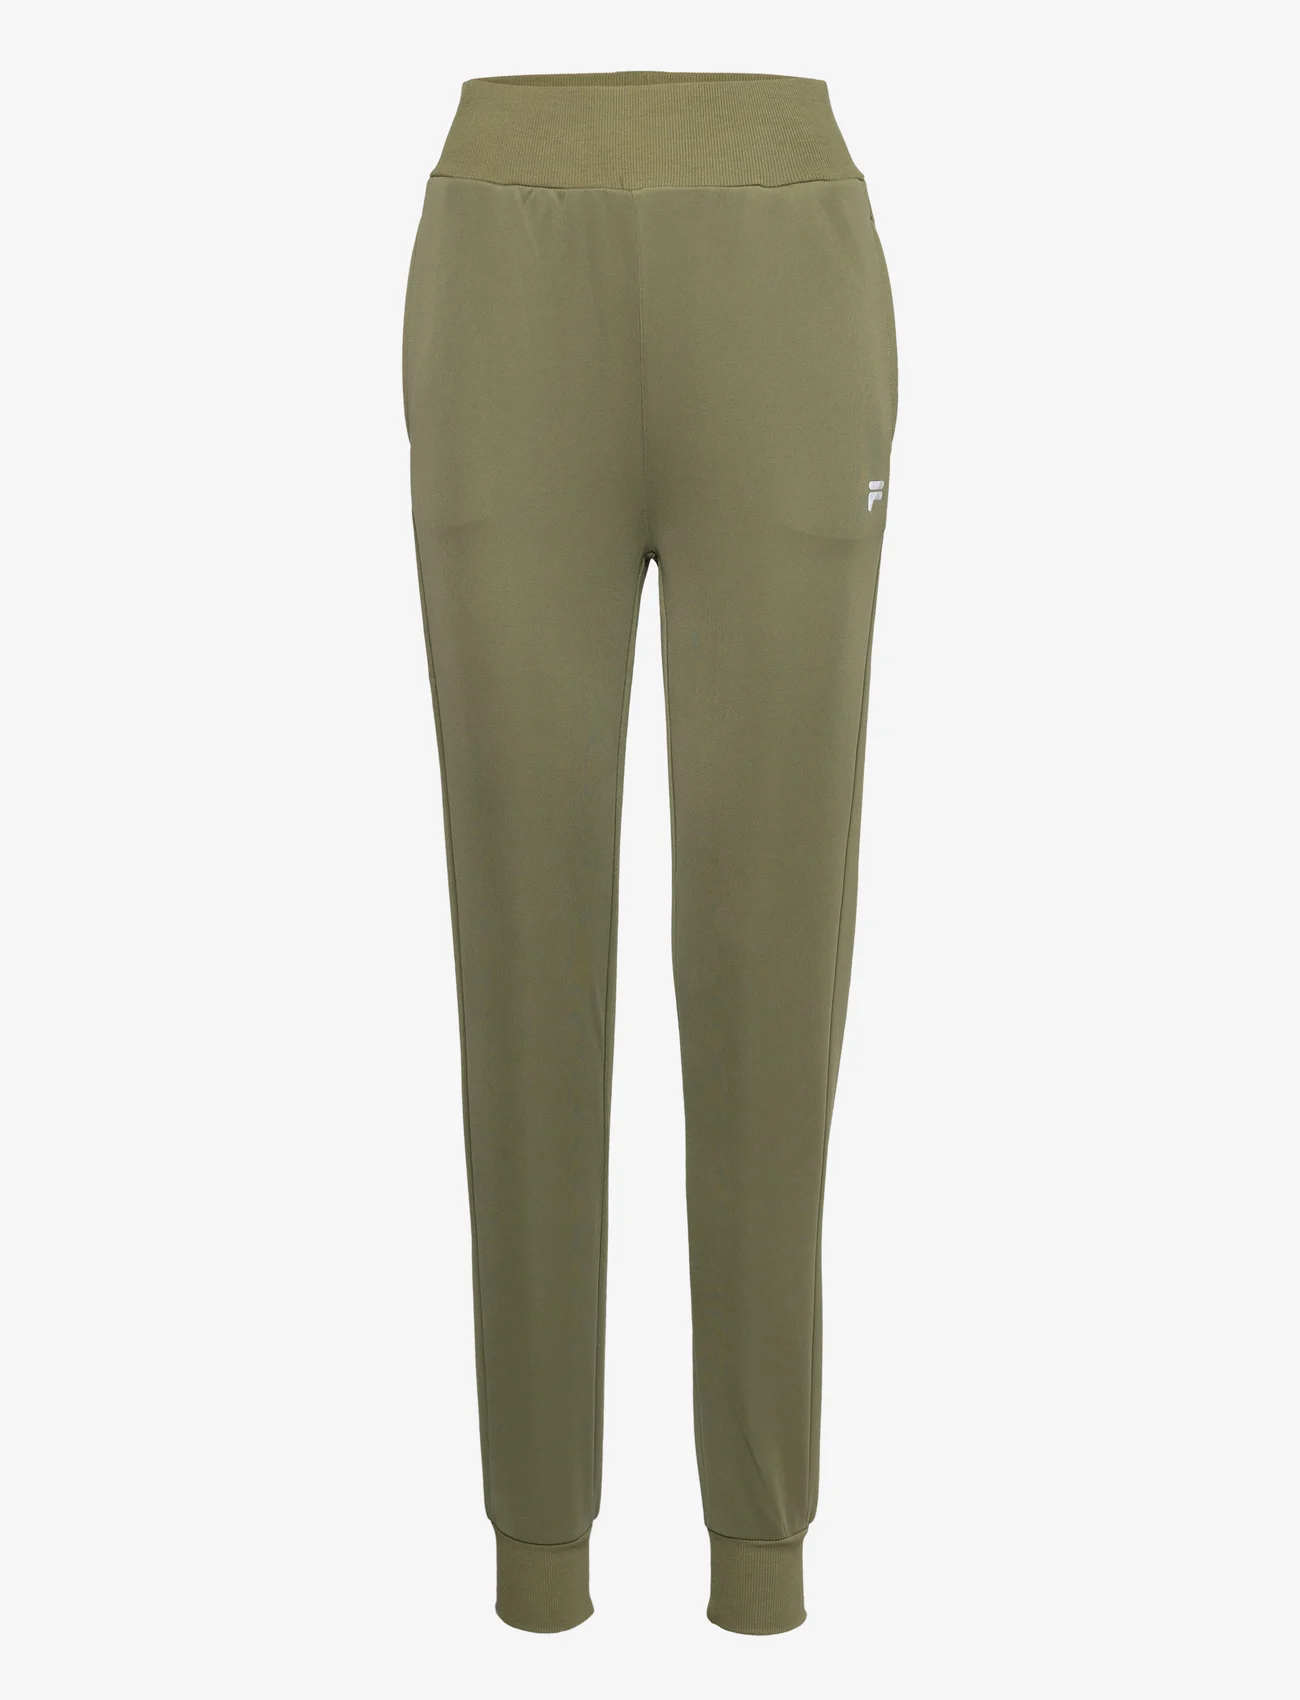 FILA - CAGLI high waist pants - sports pants - loden green - 0